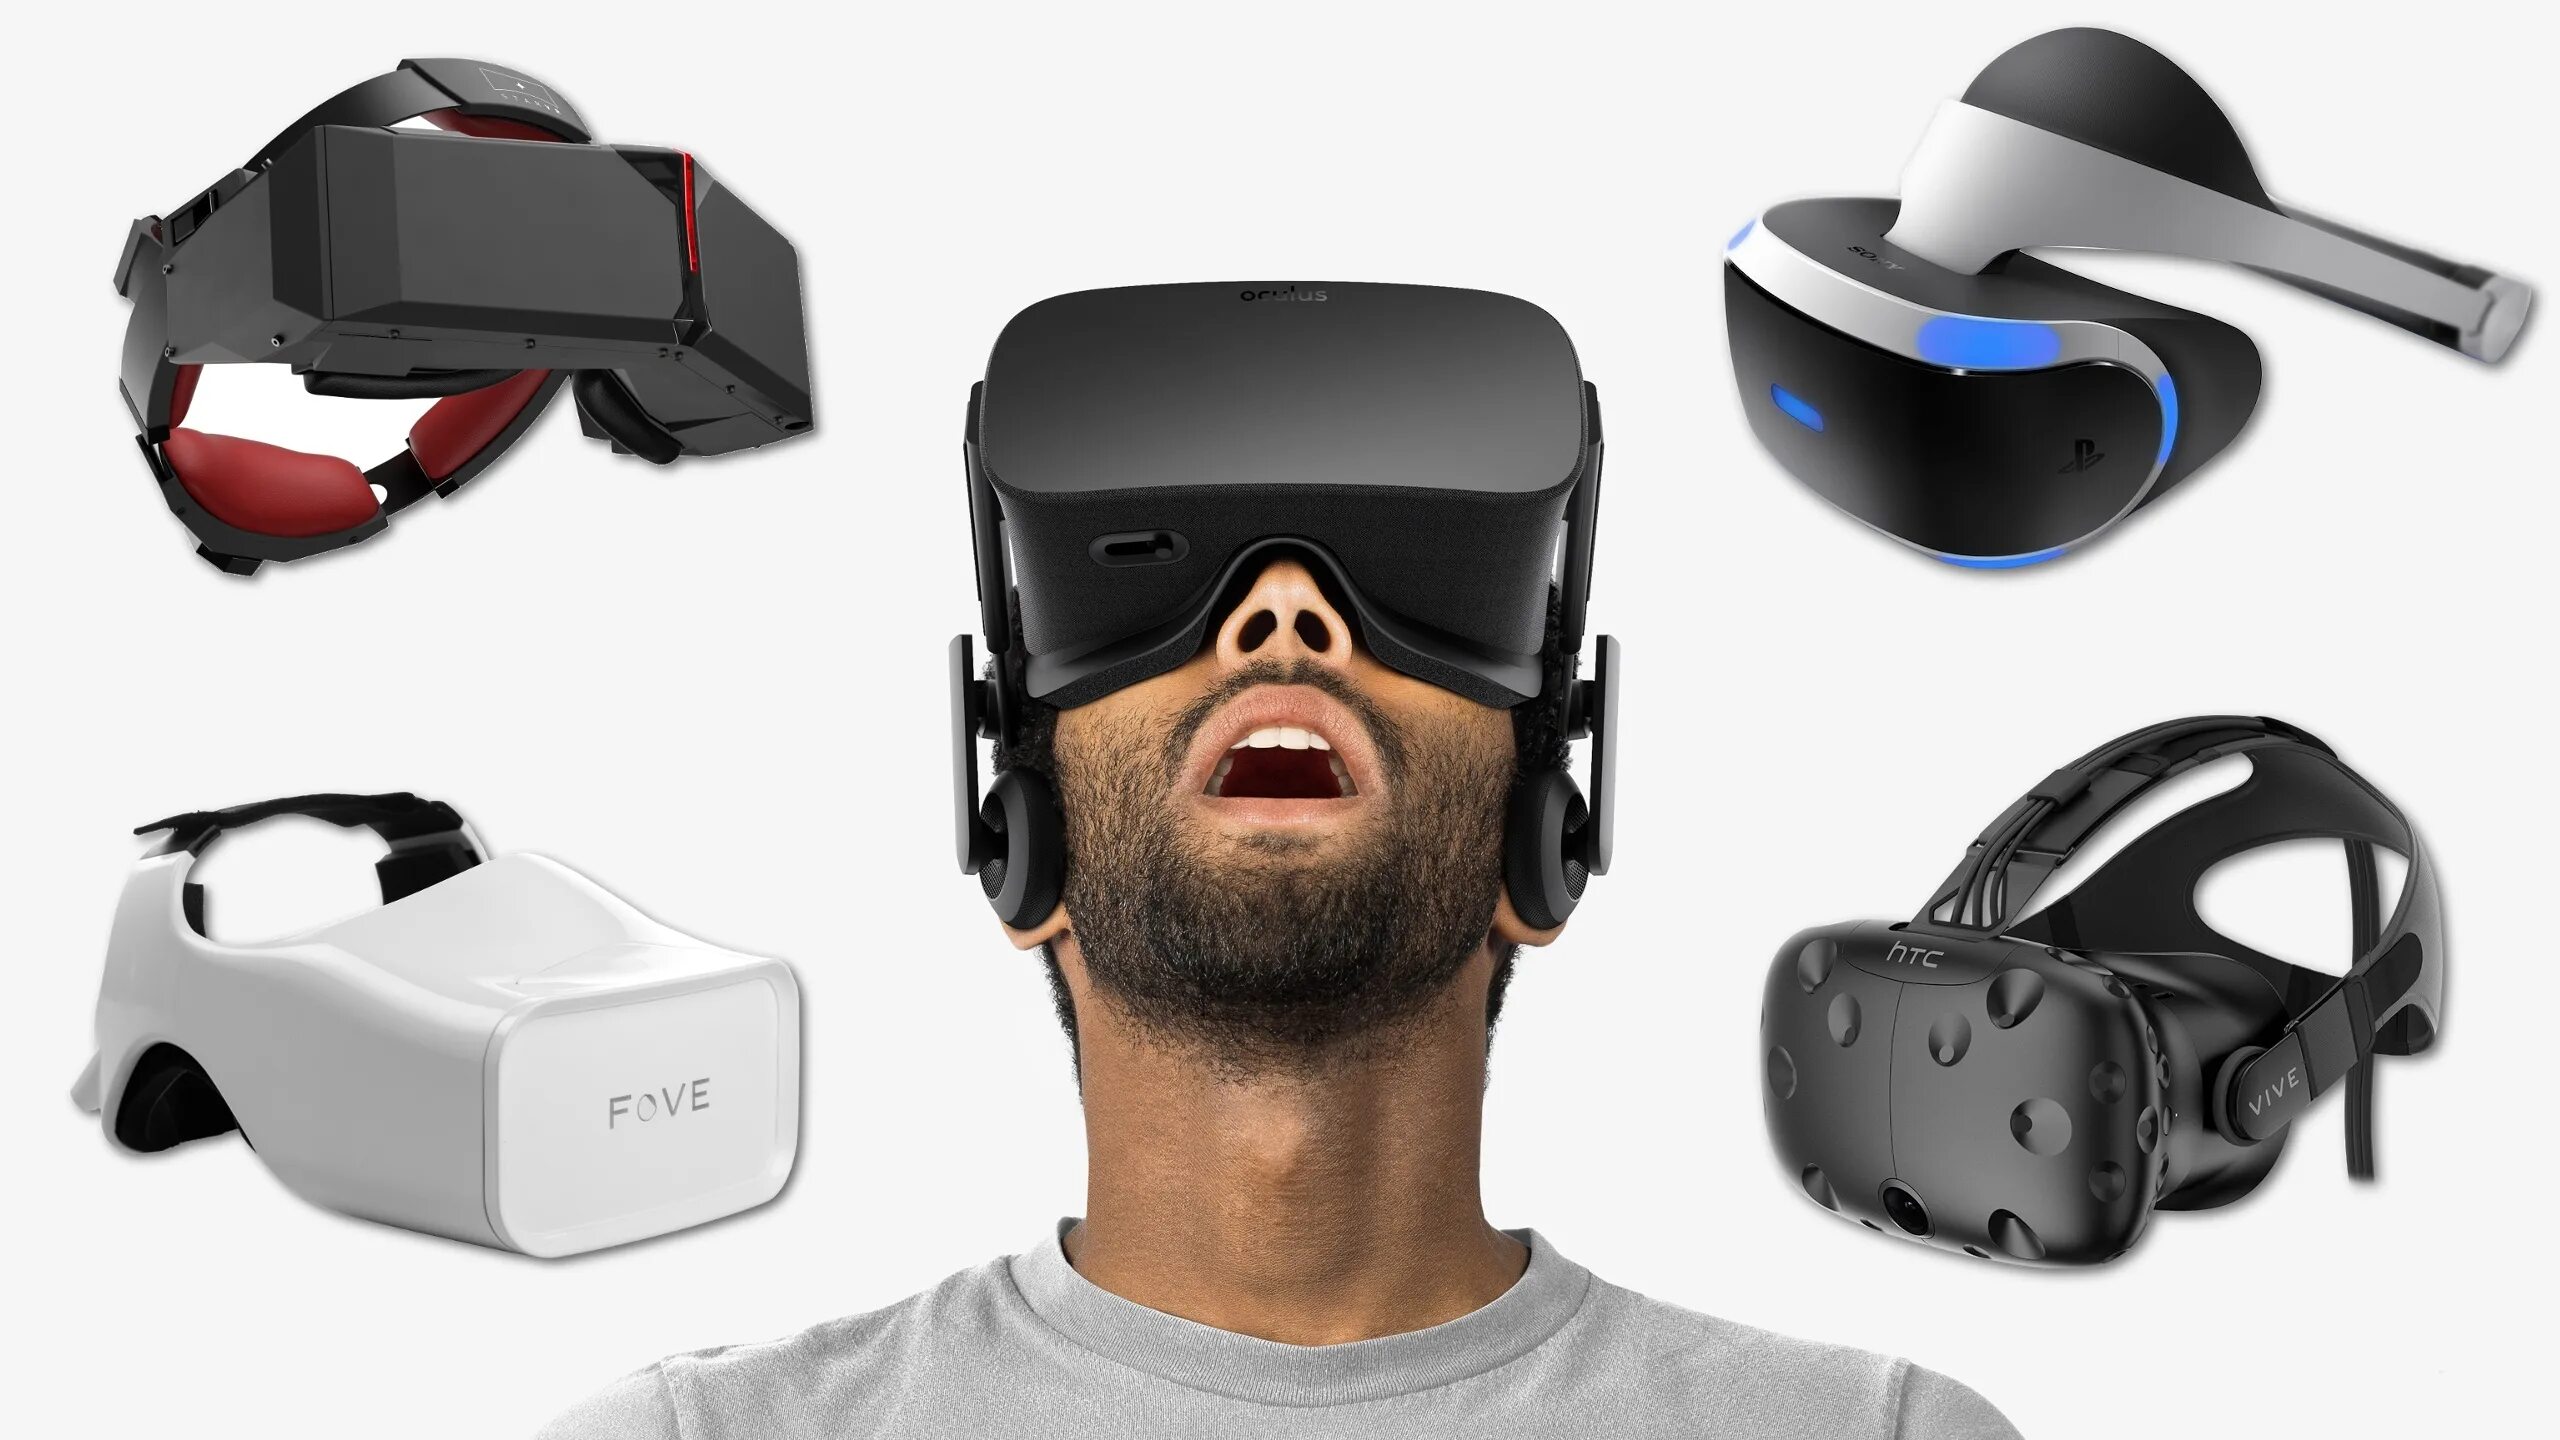 Re vr. VR очки HTC Vive. Sony PLAYSTATION VR HTC Vive Oculus Rift VR. VR очки Vive Pro 2 весь комплект. PS VR 2 очки виртуальной реальности.